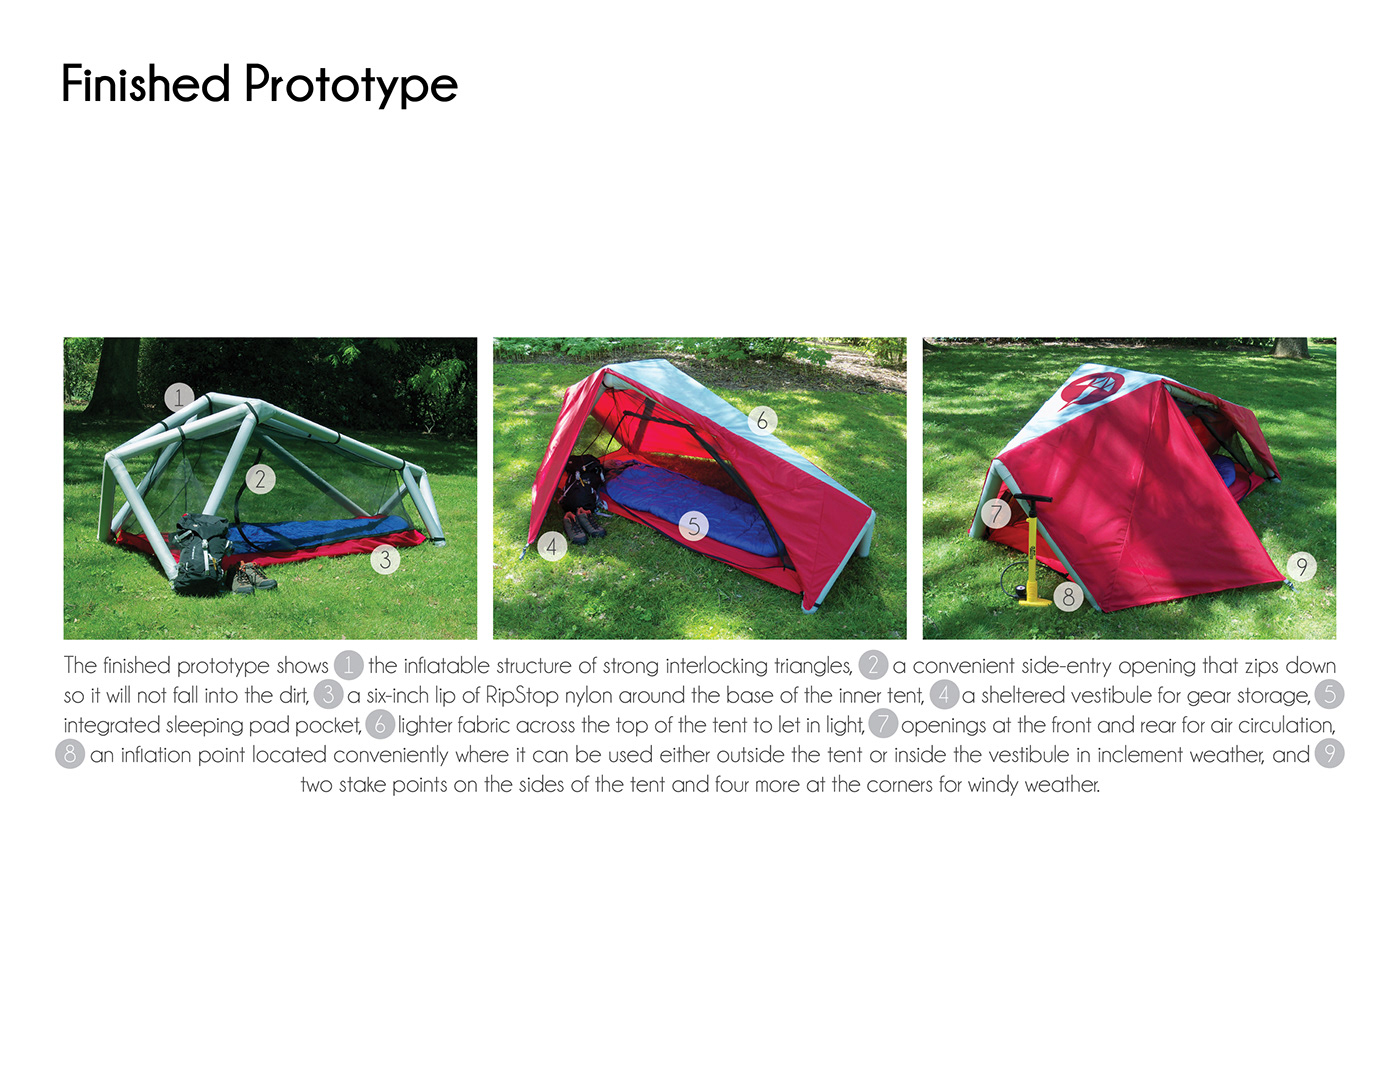 industrial design  inflatable tent Outdoor Gear product design  soft goods Tent Design